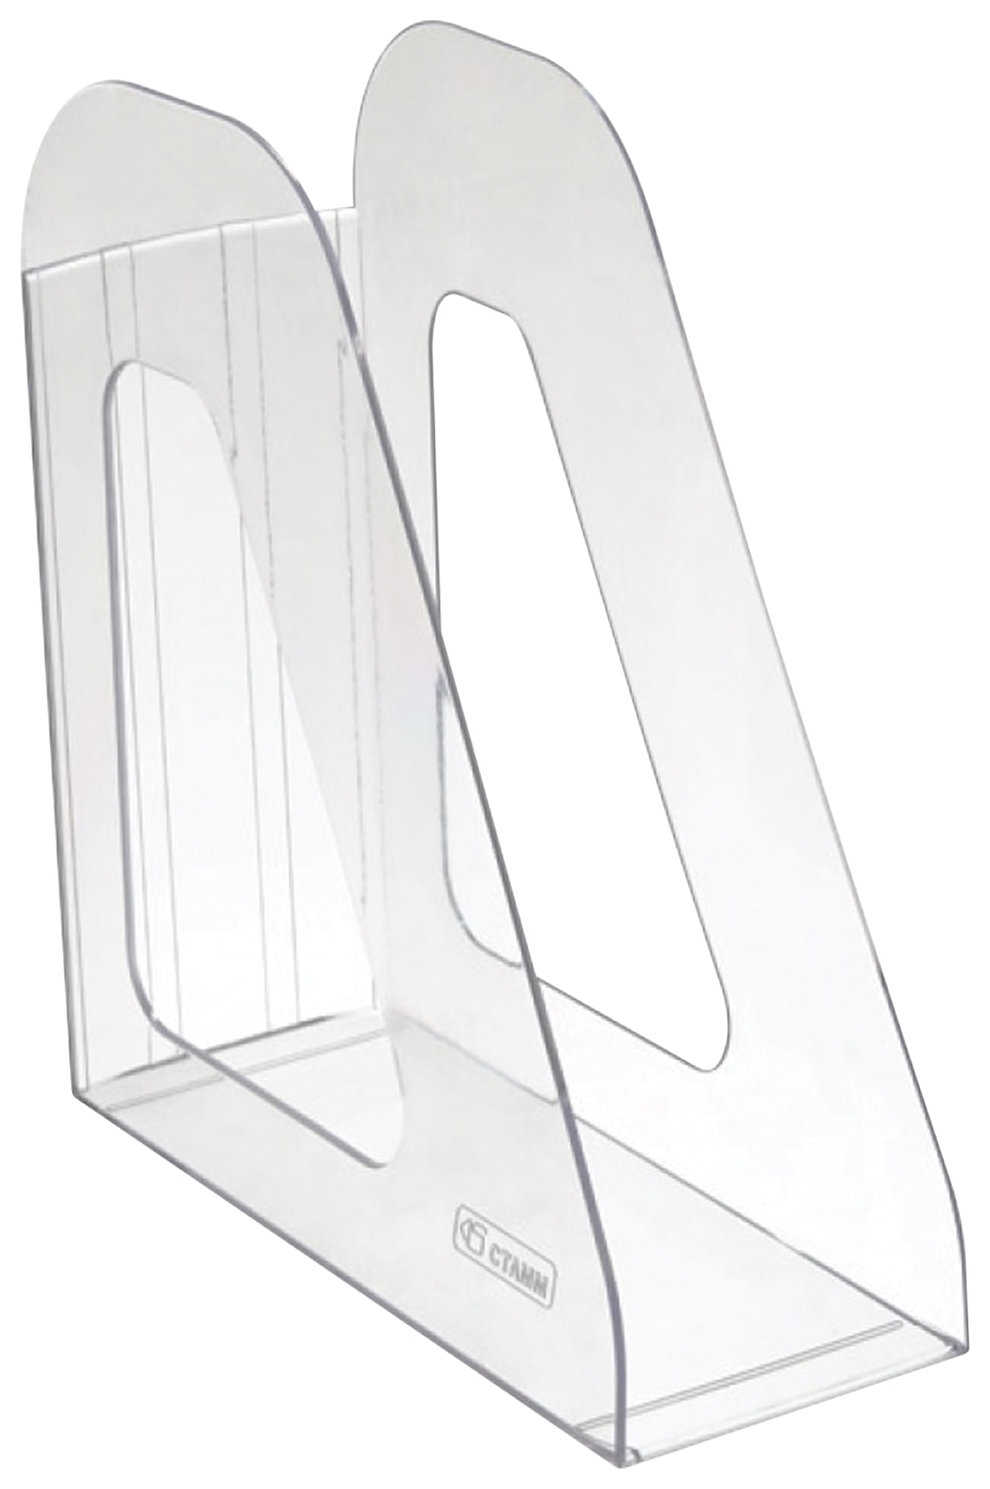 Лоток вертикальный для бумаг стамм Фаворит (233х240 мм), ширина 90 мм, прозрачный, лт701